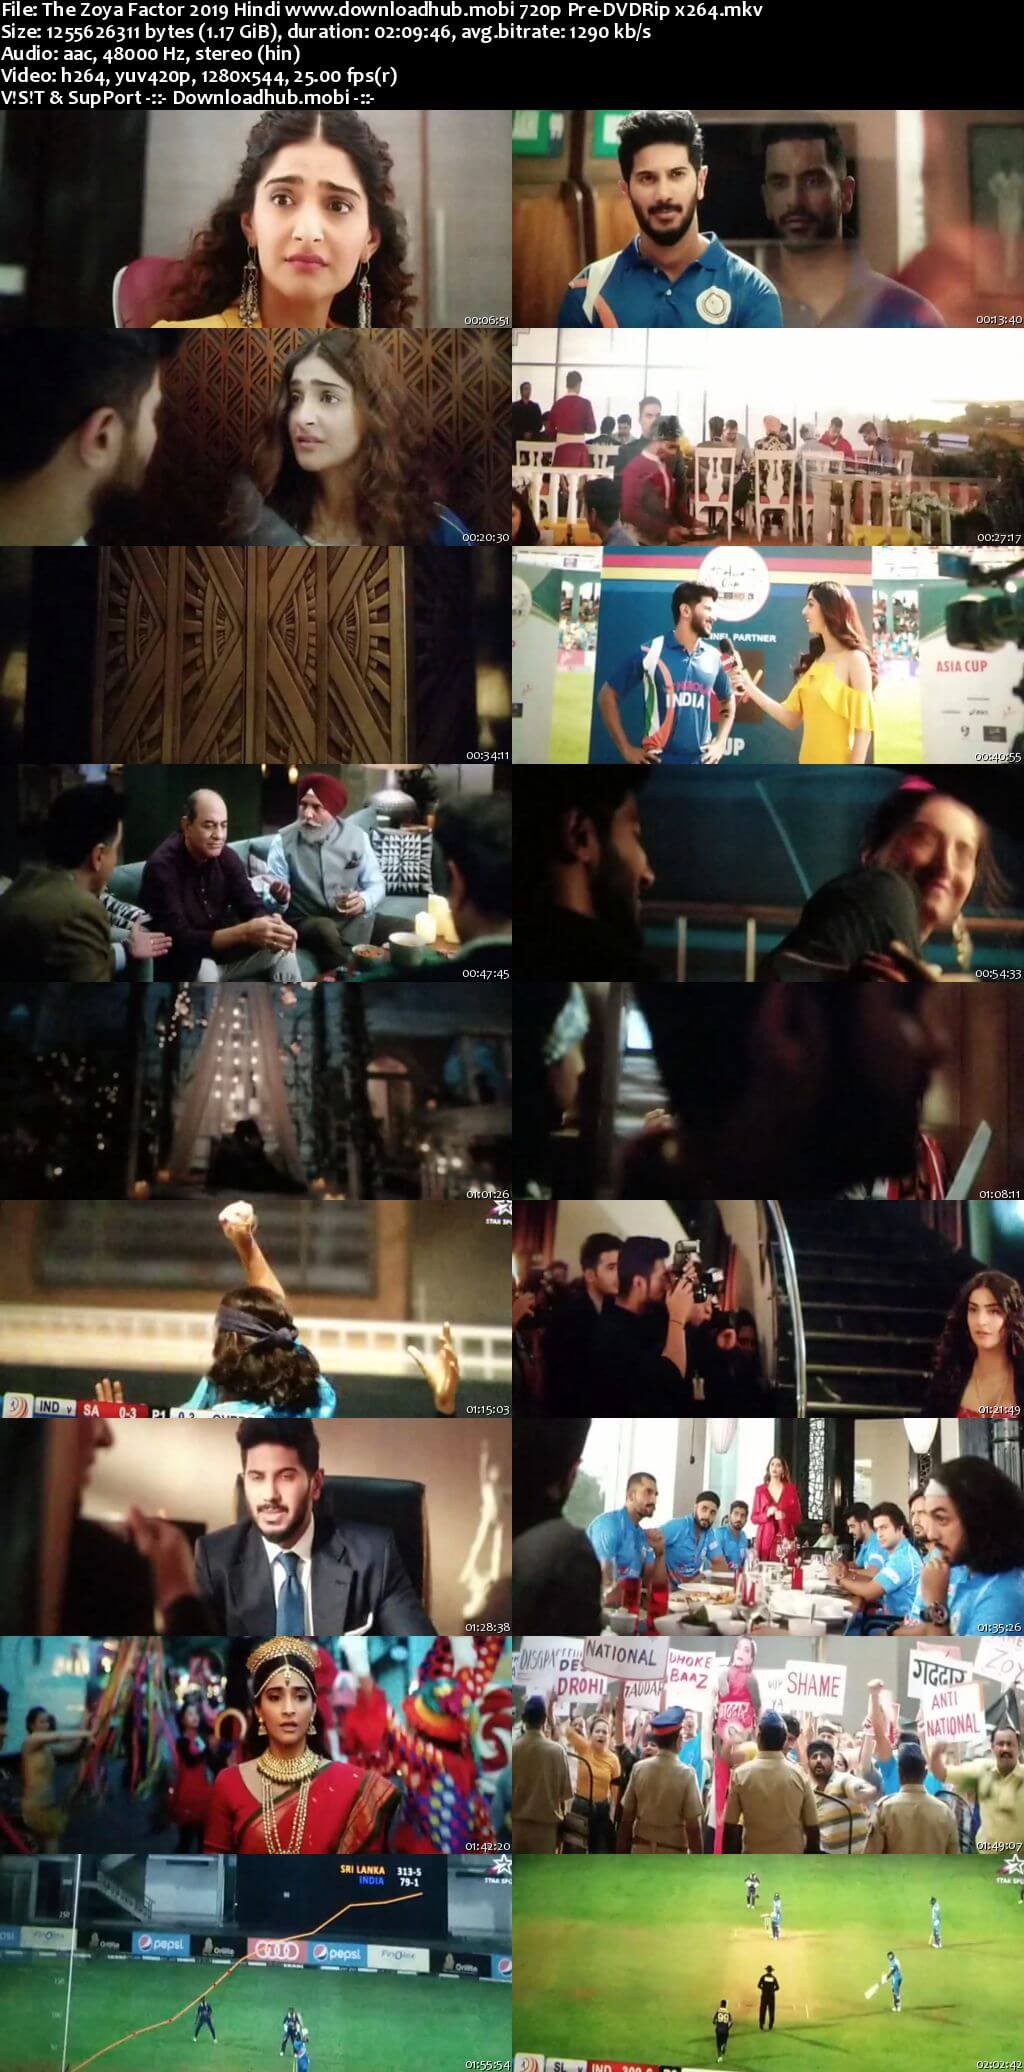 The Zoya Factor 2019 Hindi 720p Pre-DVDRip x264